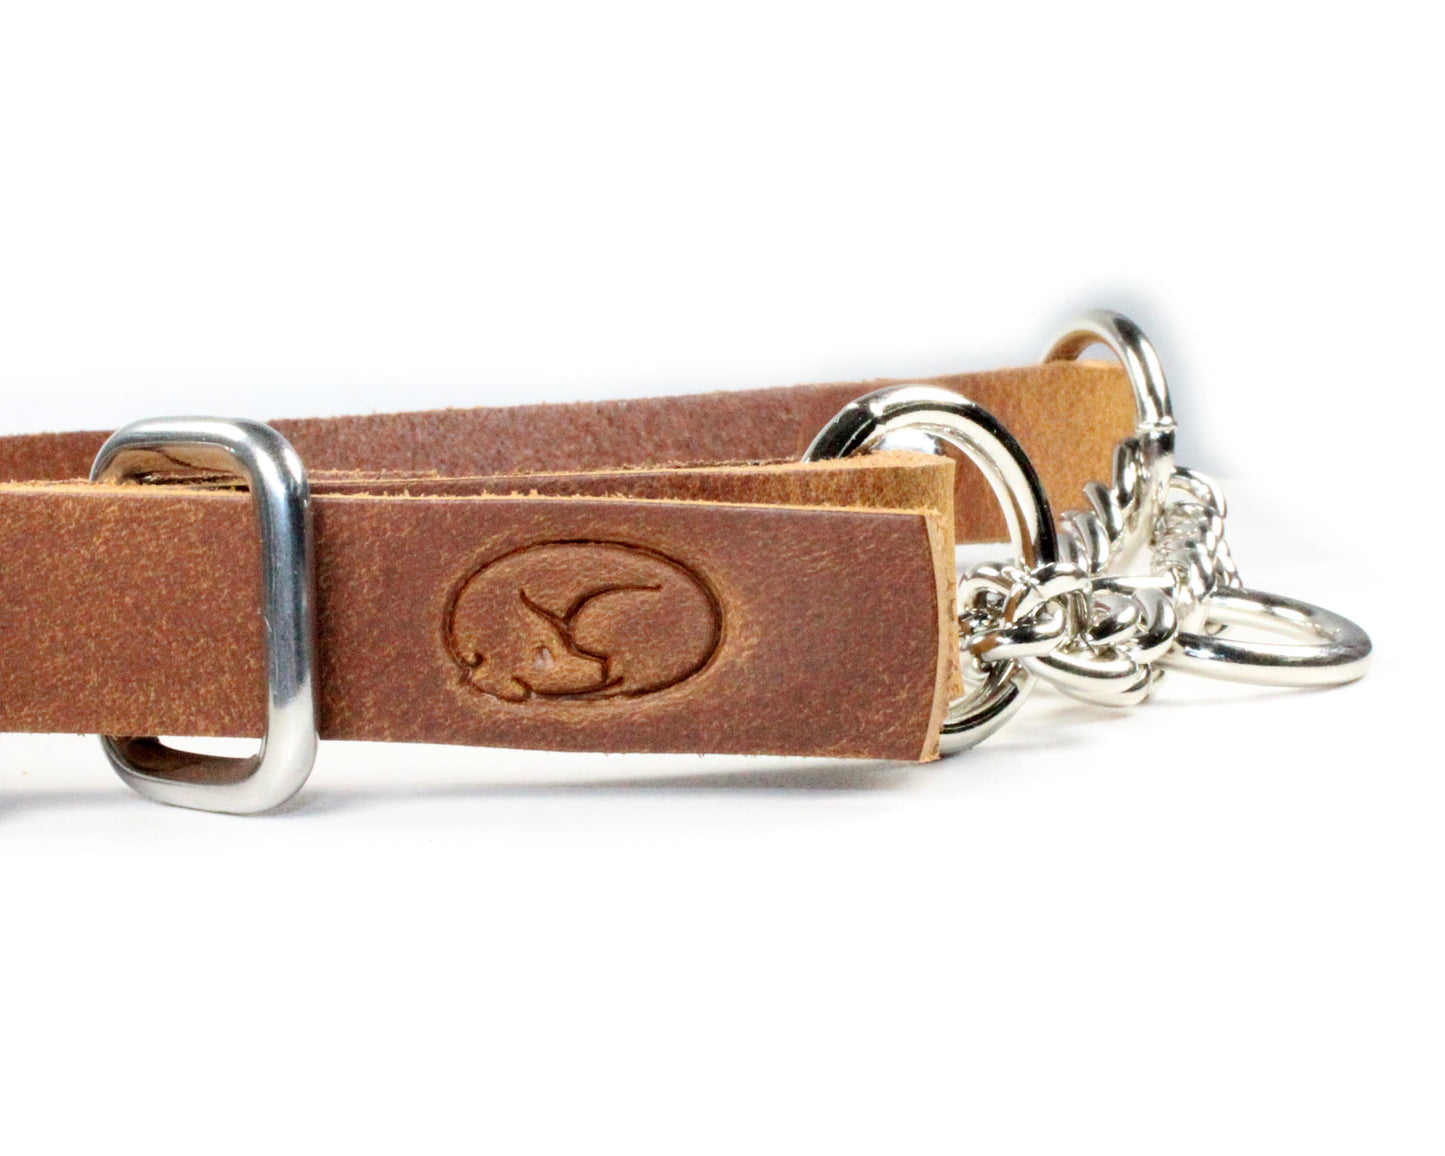 3/4" Small Dog Adjustable Leather Martingale Chain Dog Collar